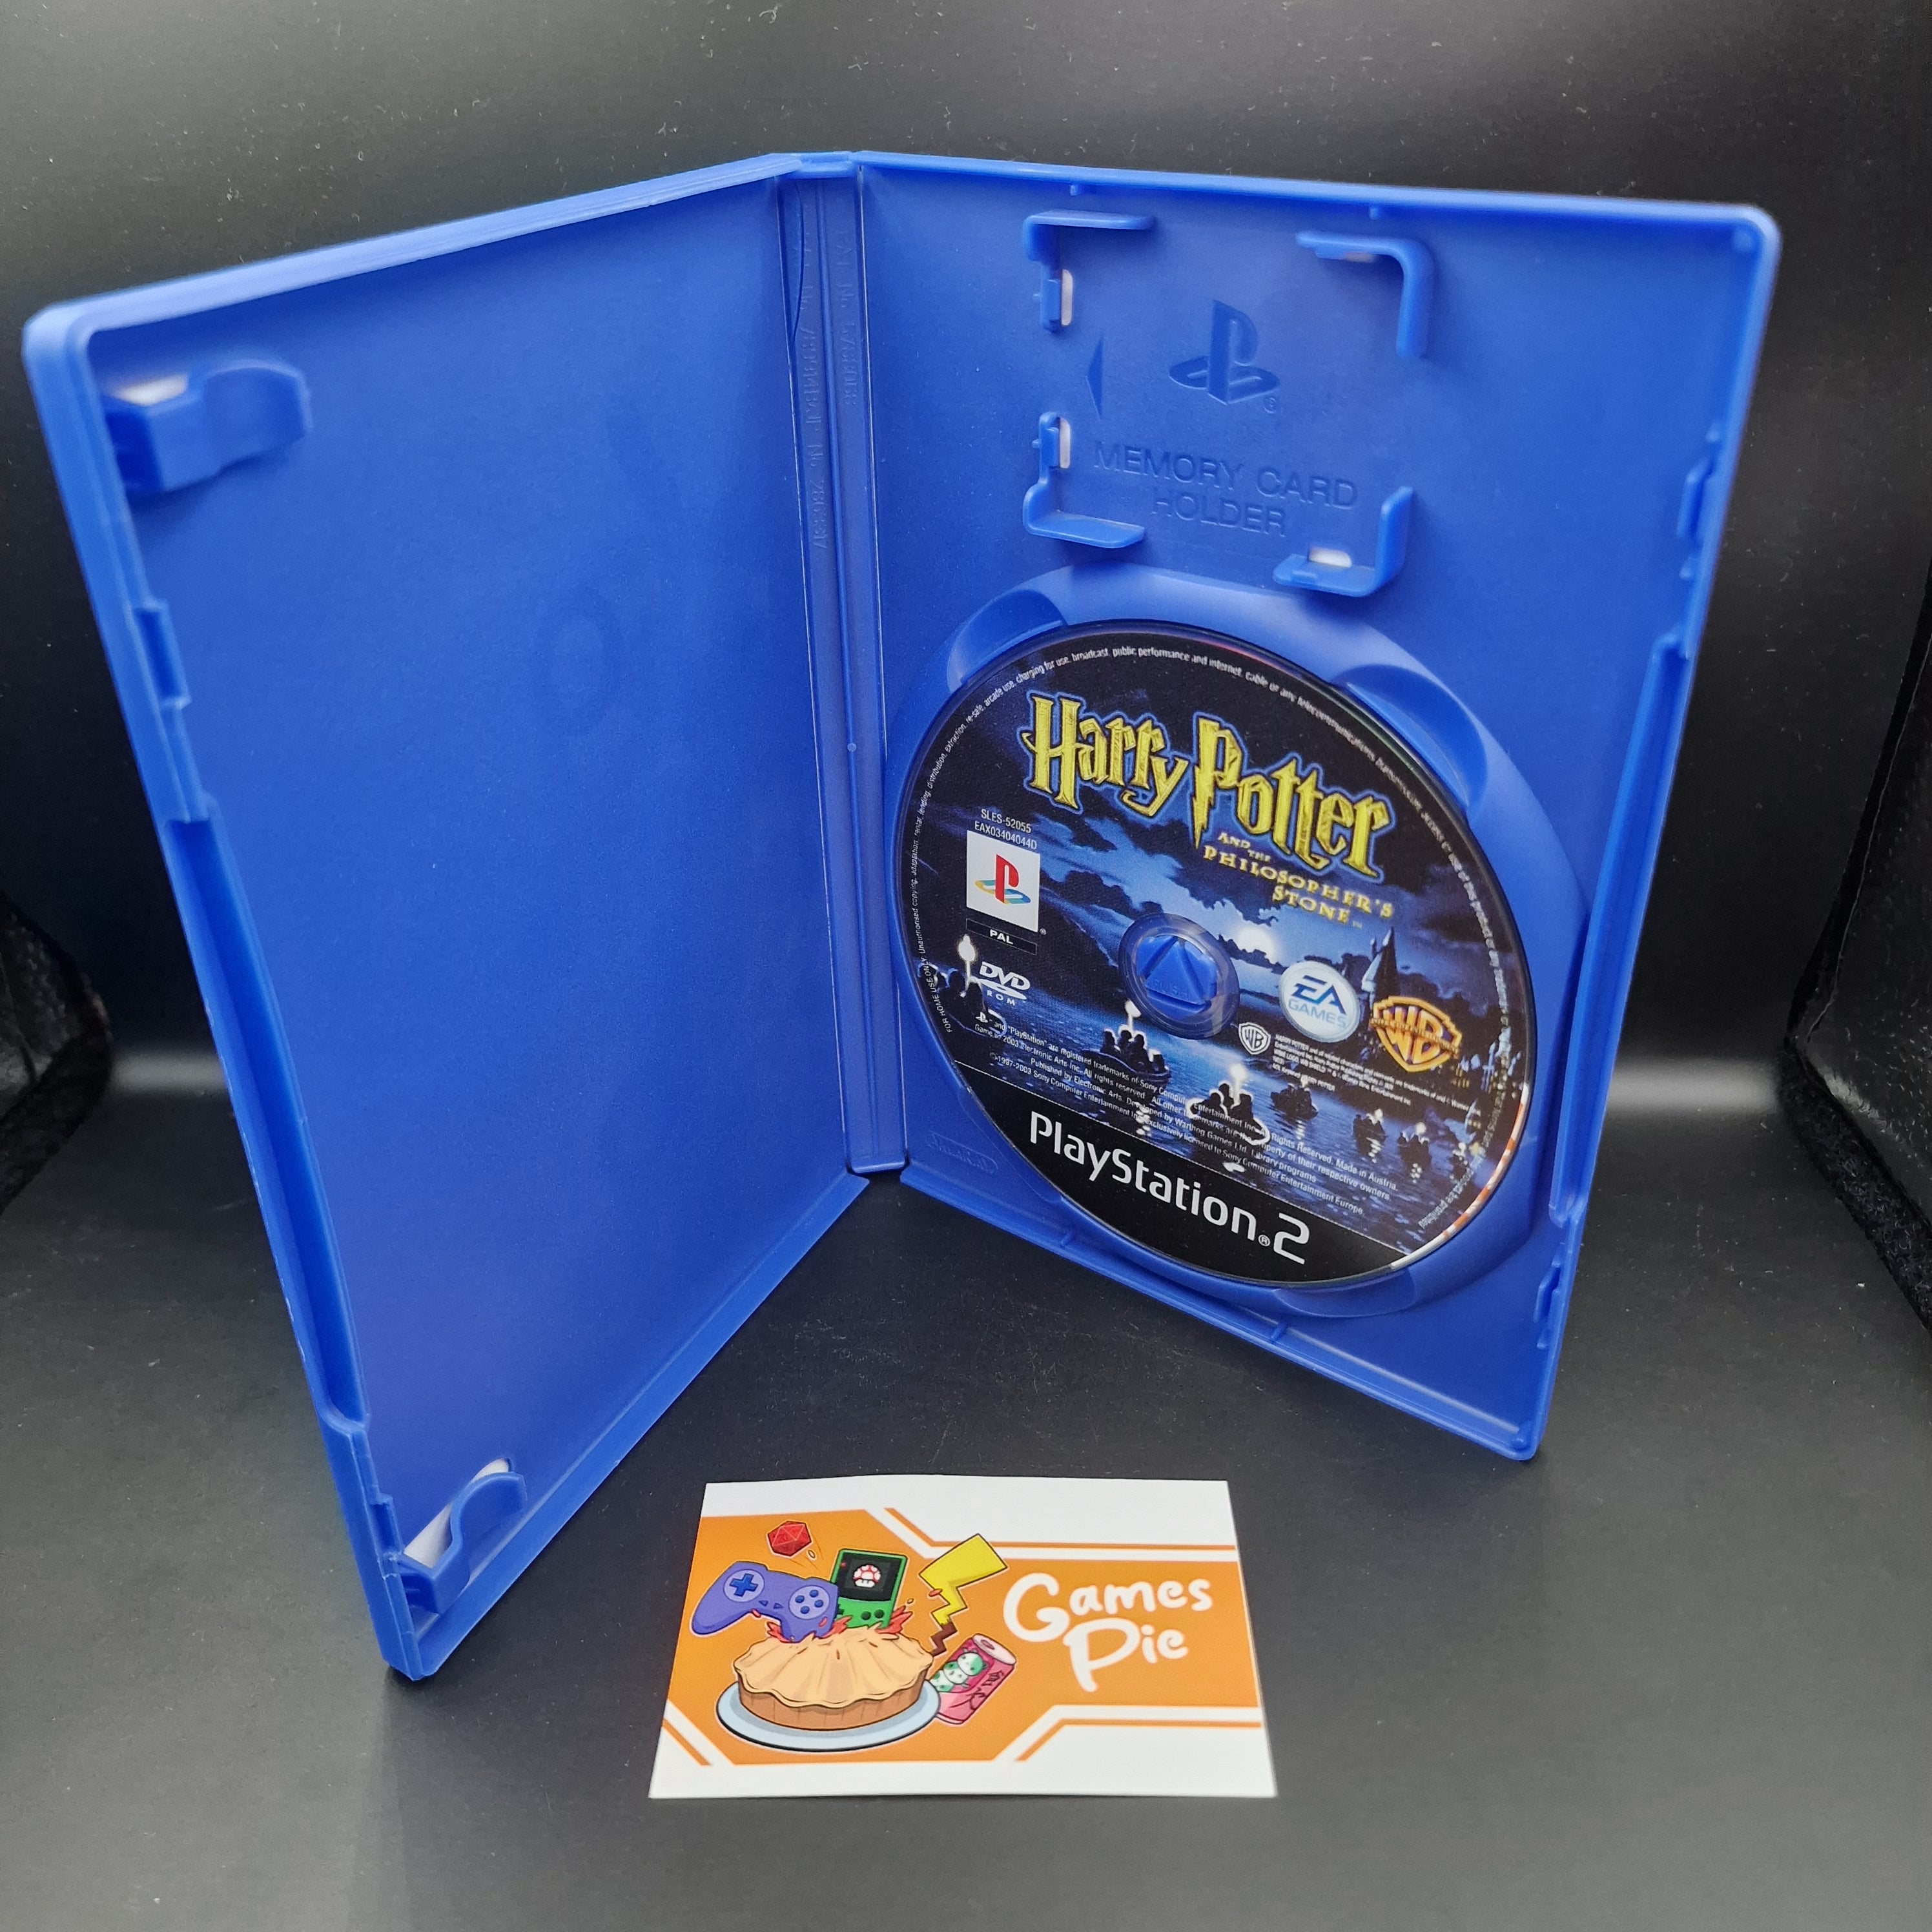 Harry Potter e la Pietra Filosofale PS2